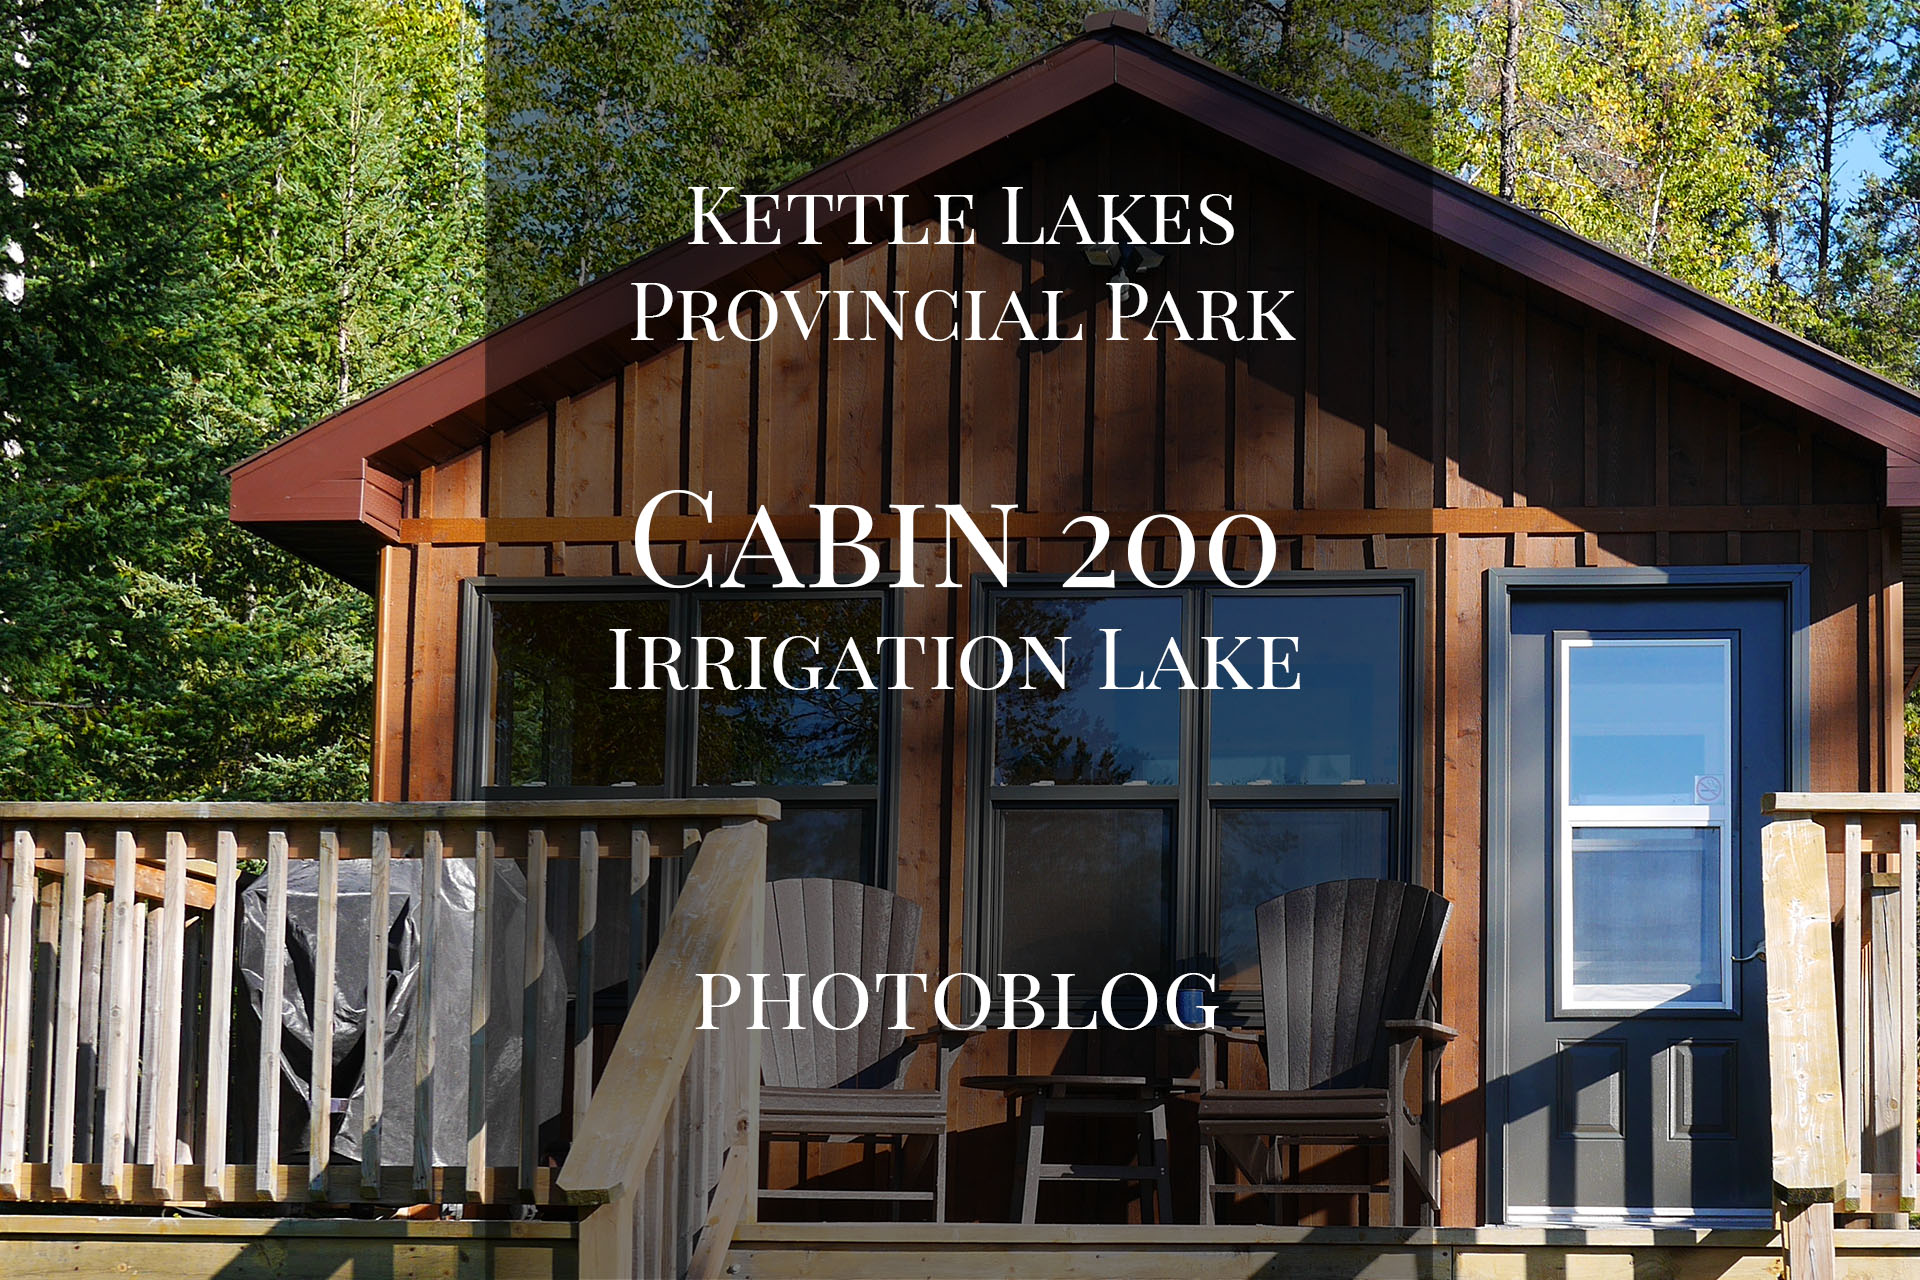 Tour Cabin 200 on Irrigation Lake – Kettle Lakes Provincial Park